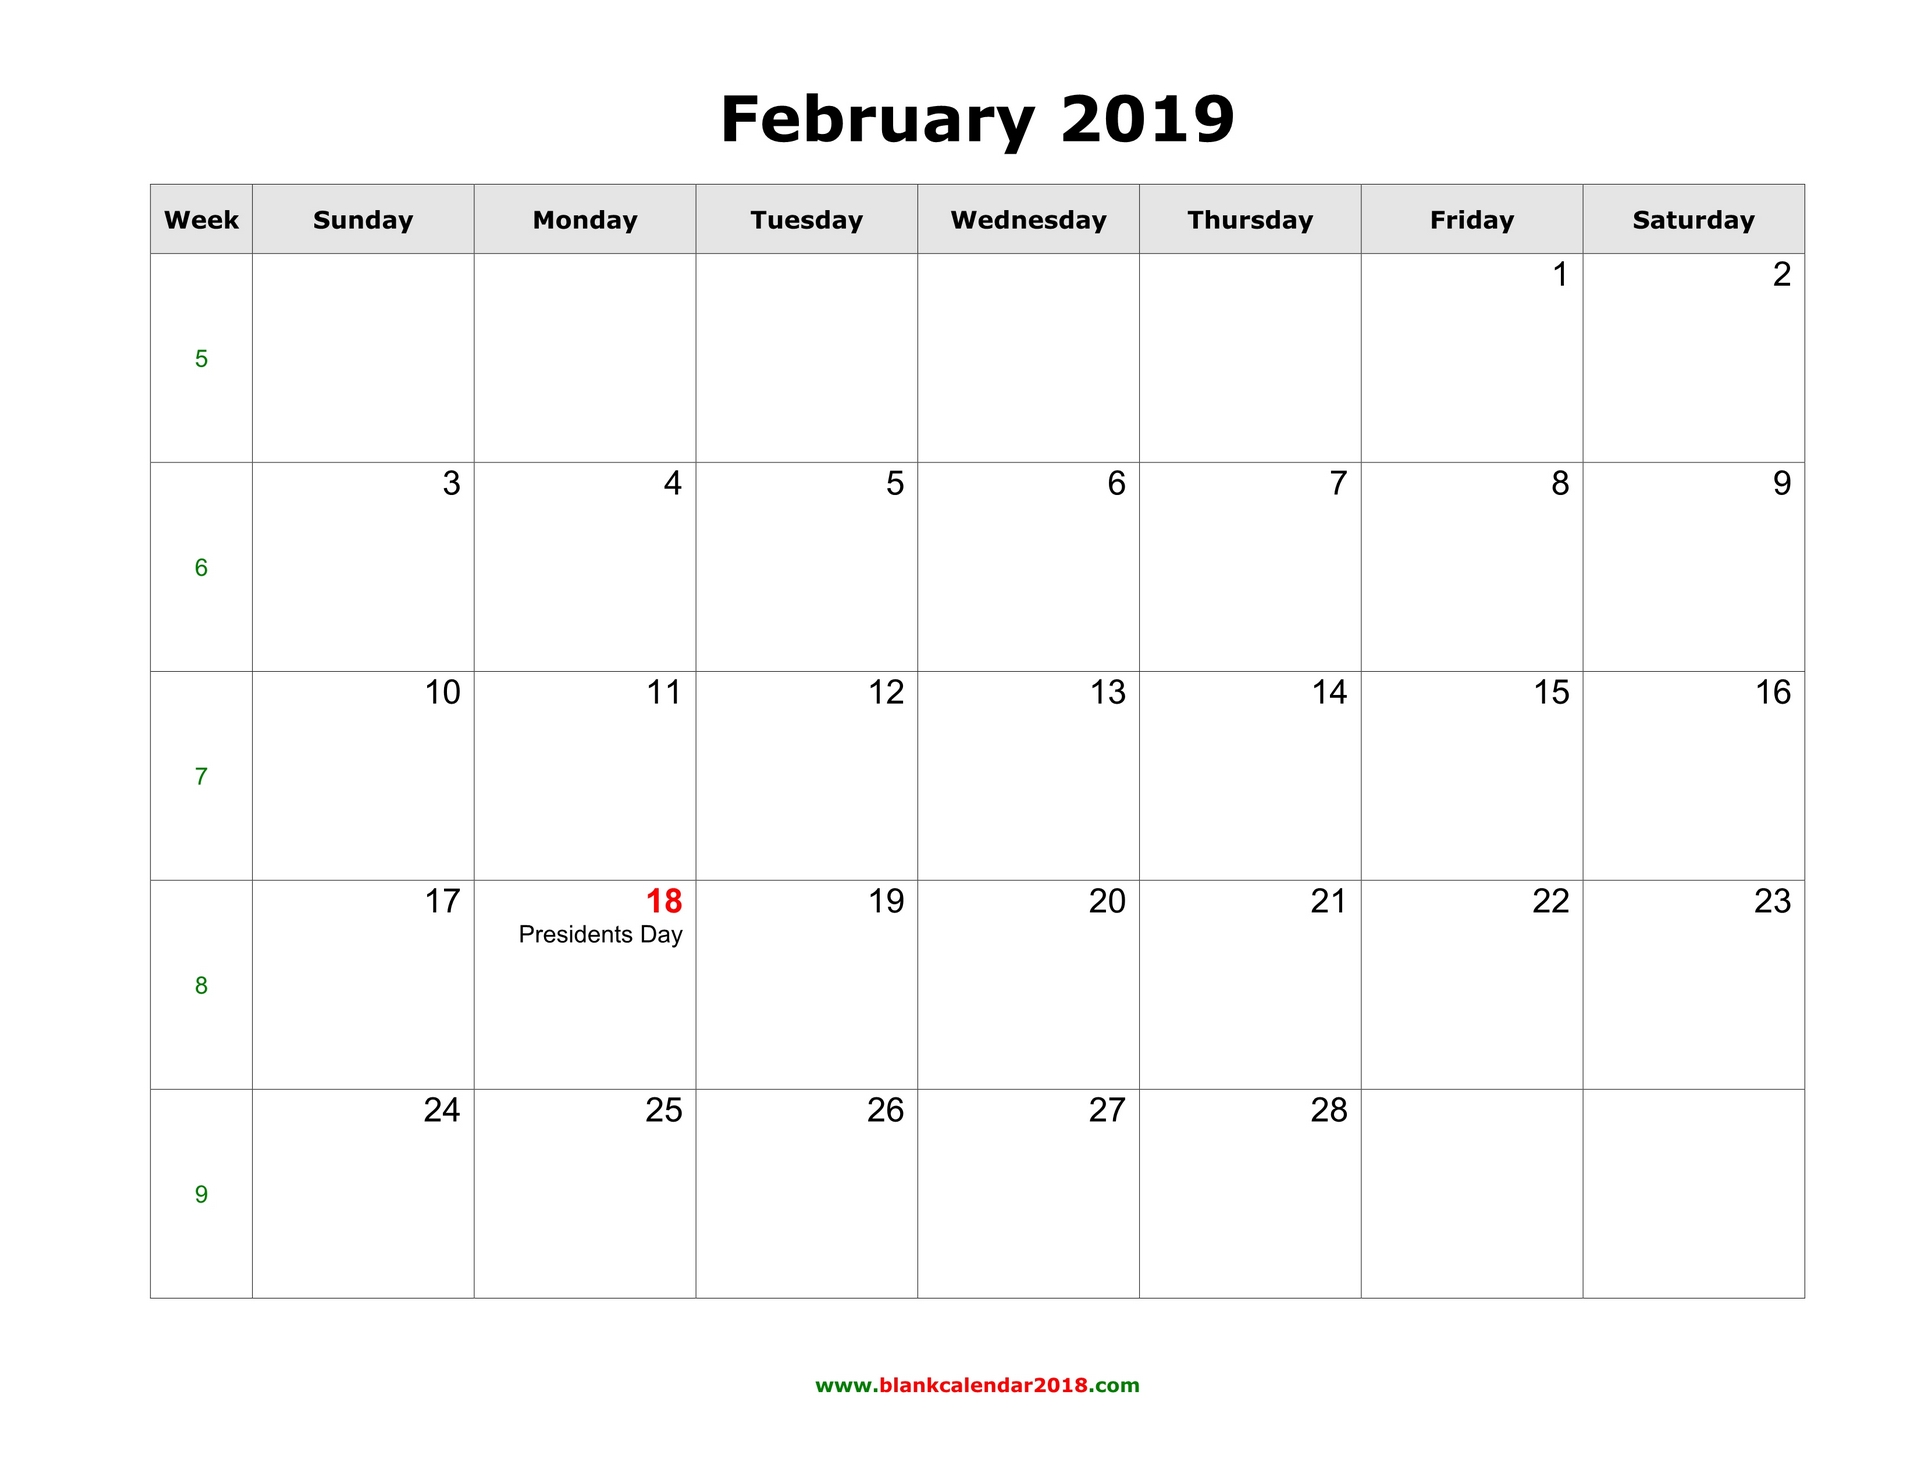 February Calendar 2019 Template With Holidays